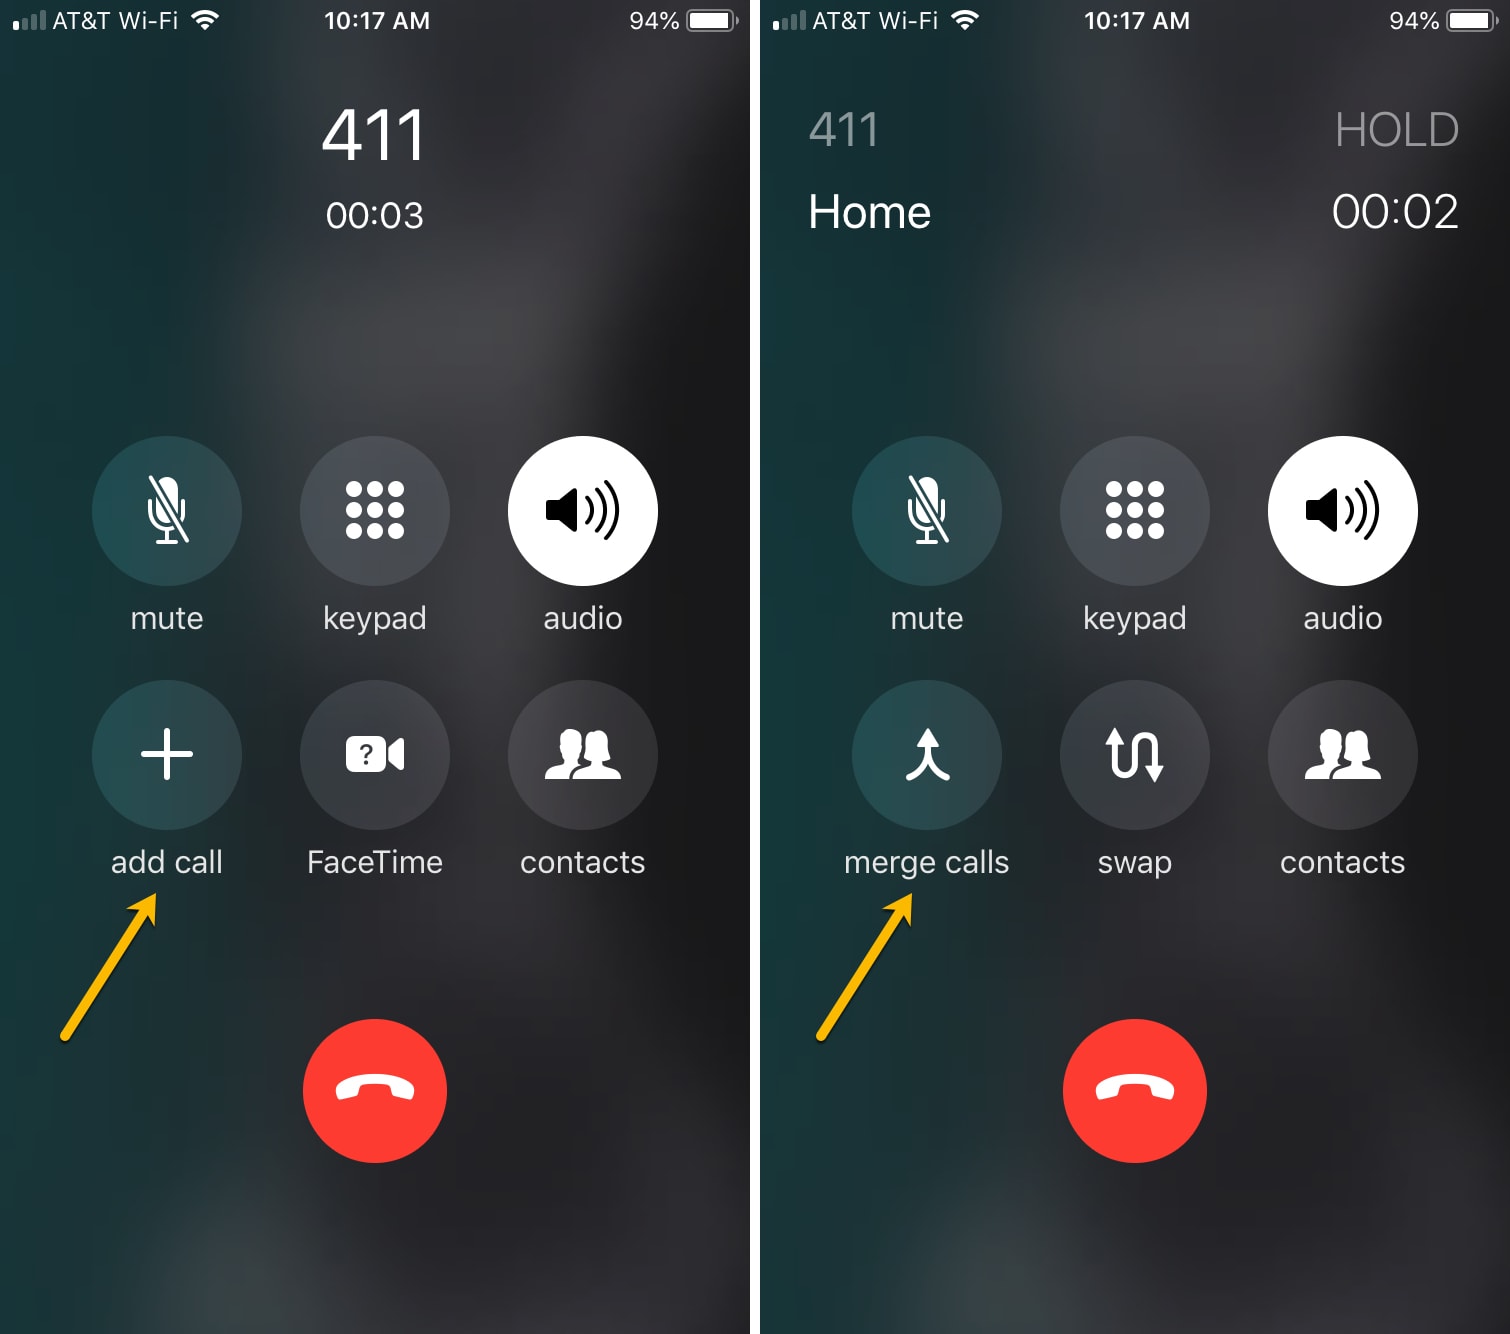 3-Way Call Setup: Initiating On IPhone 10